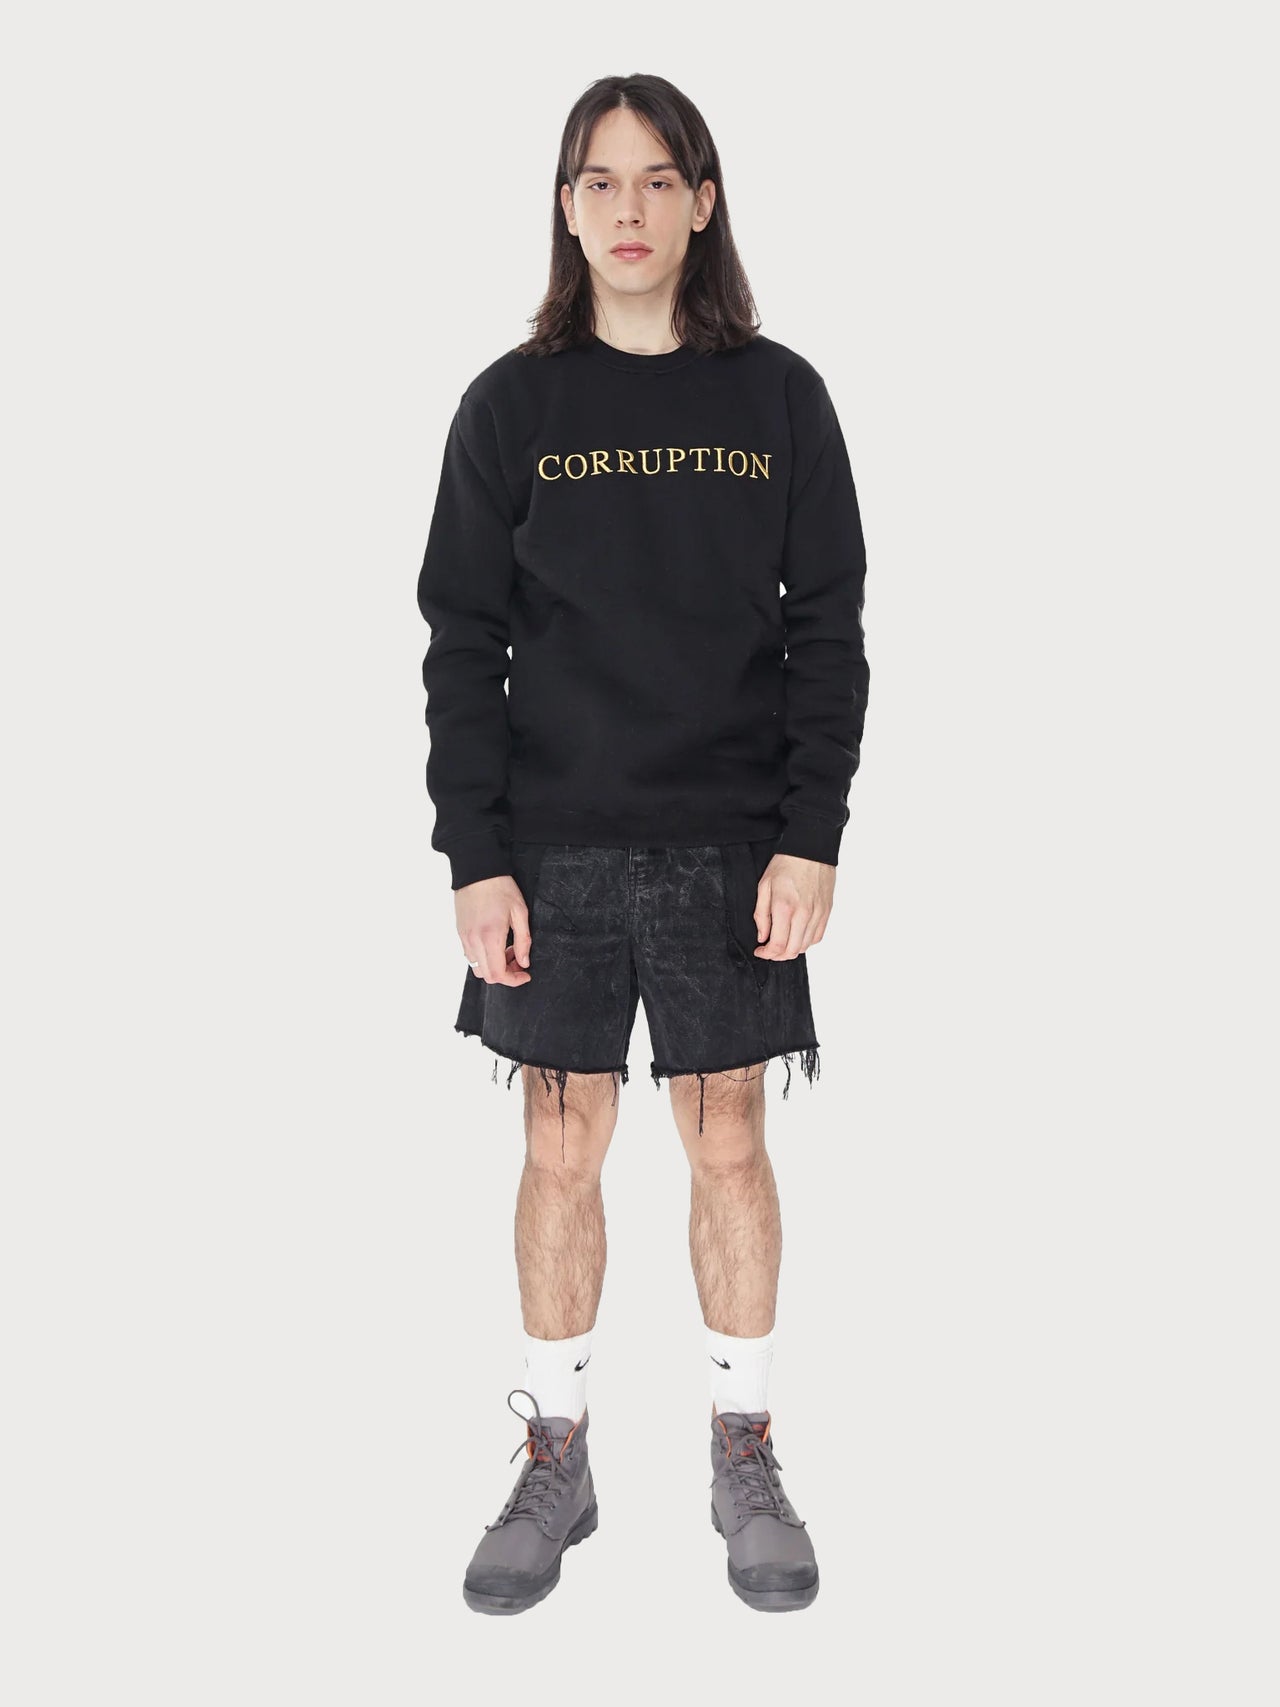 Corruption Sweatshirt